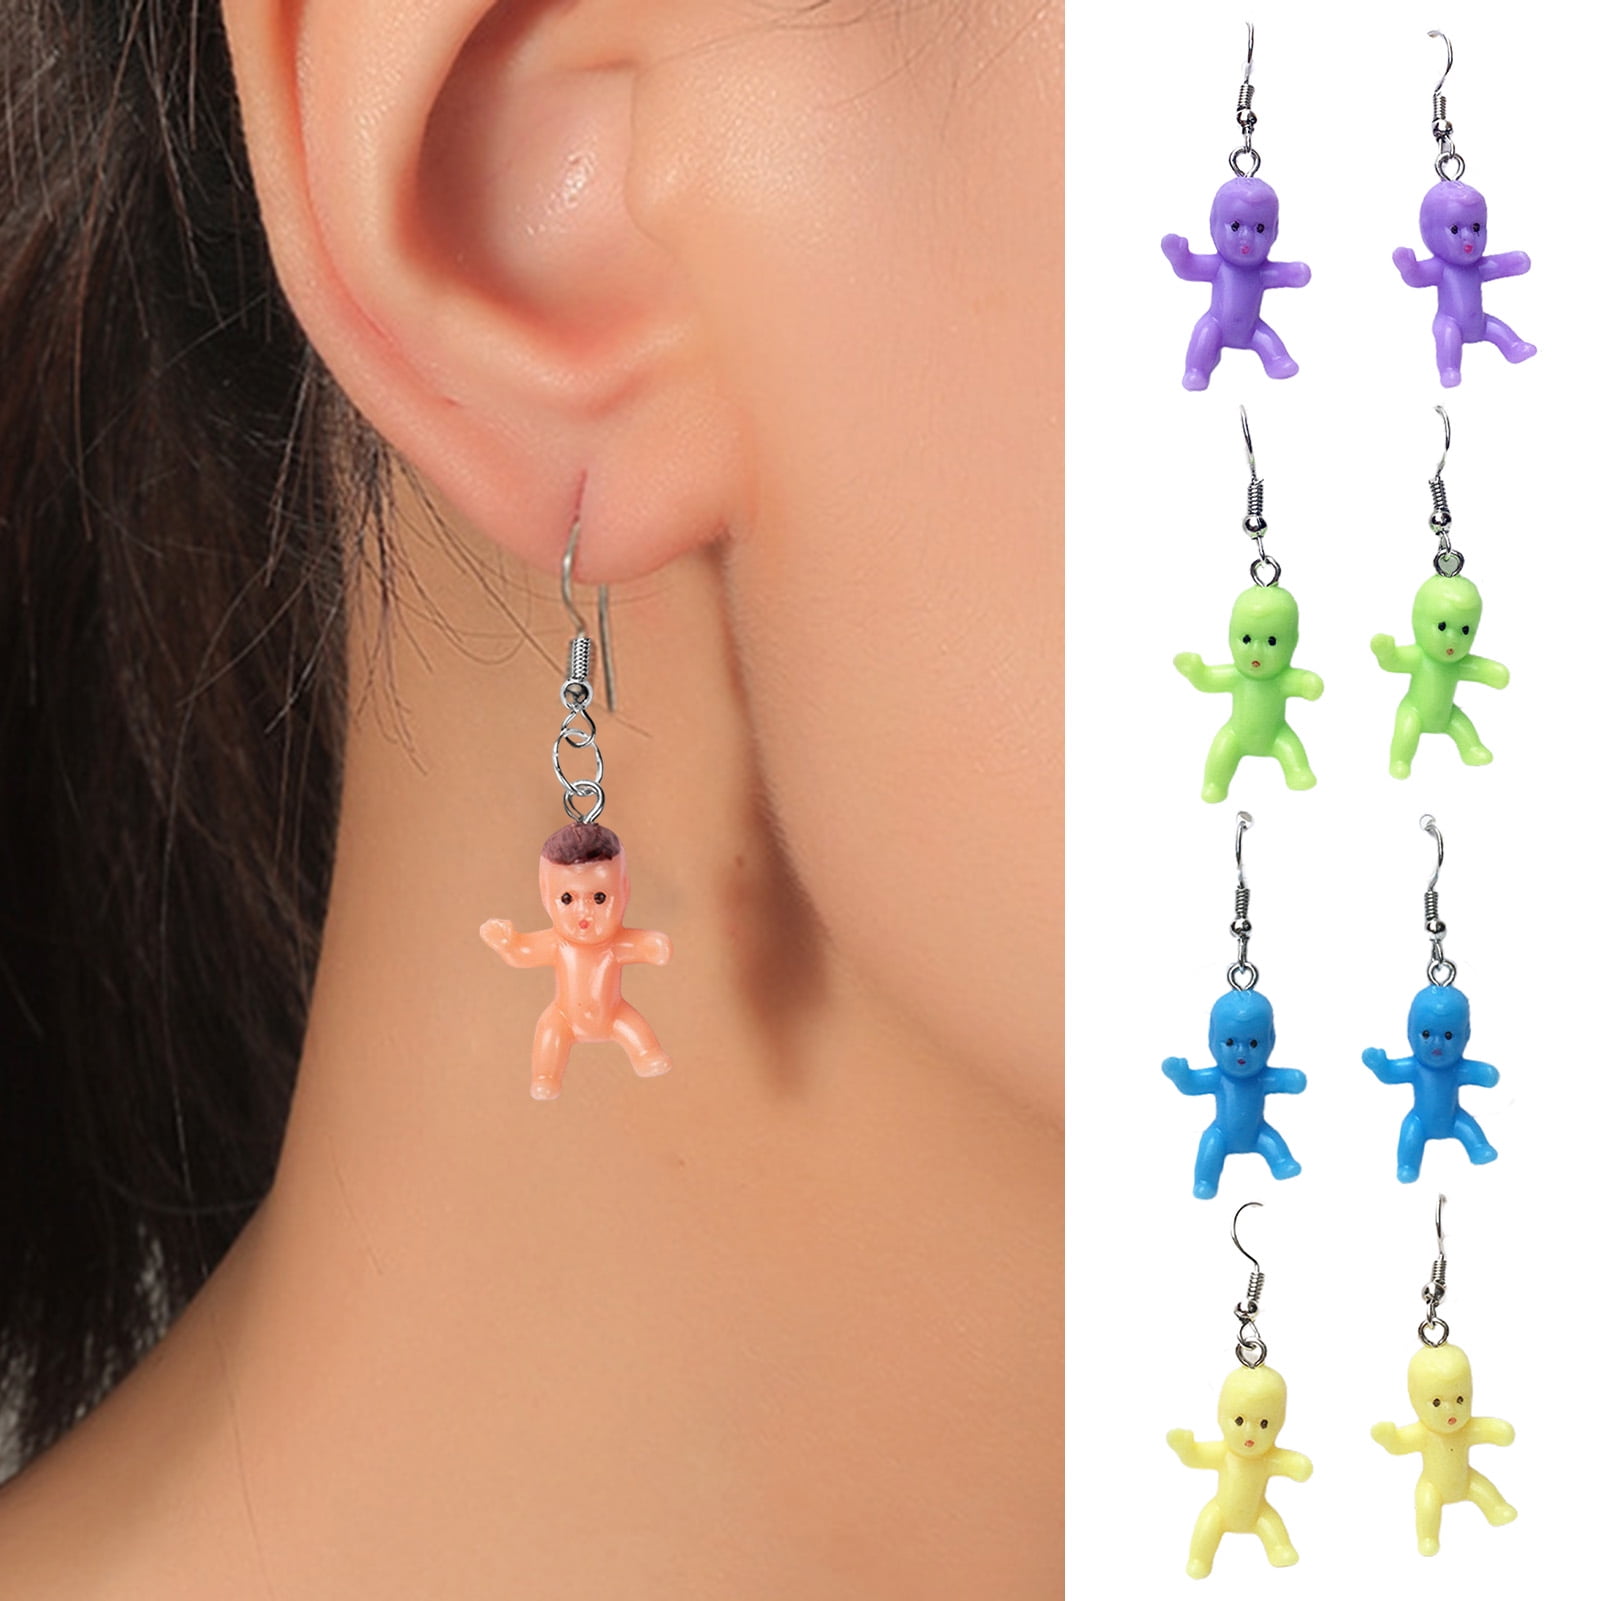 Share 165+ baby doll earrings